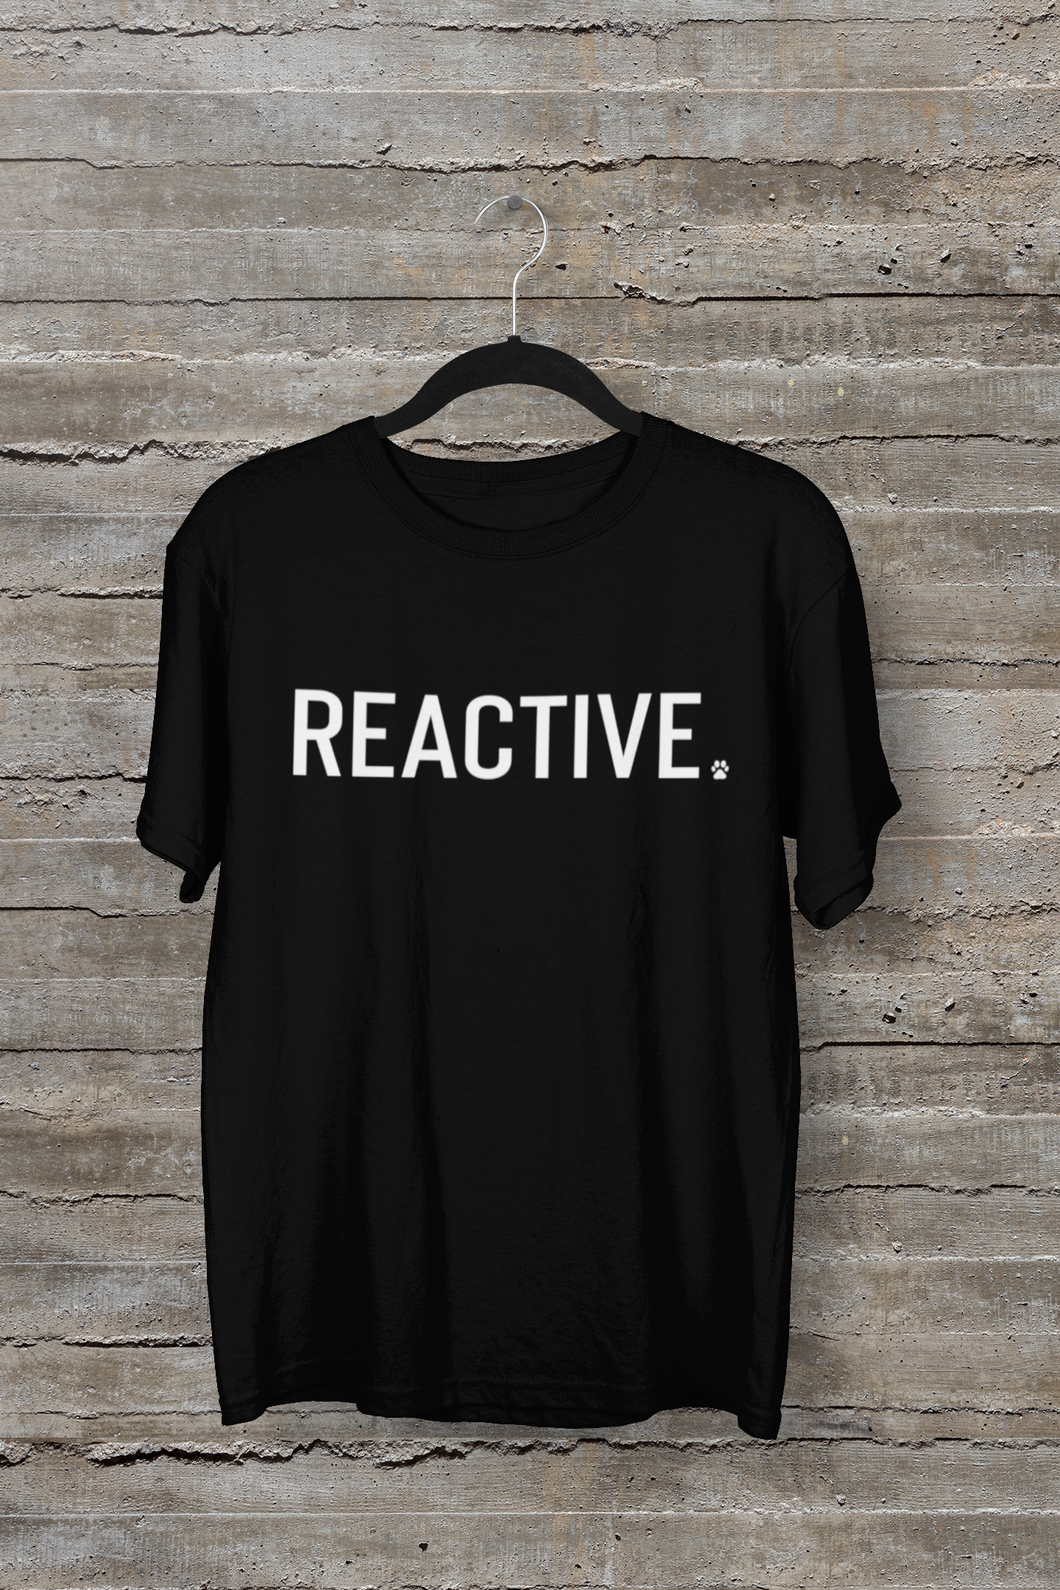 Reactive Men's/Unisex or Women's T-shirt